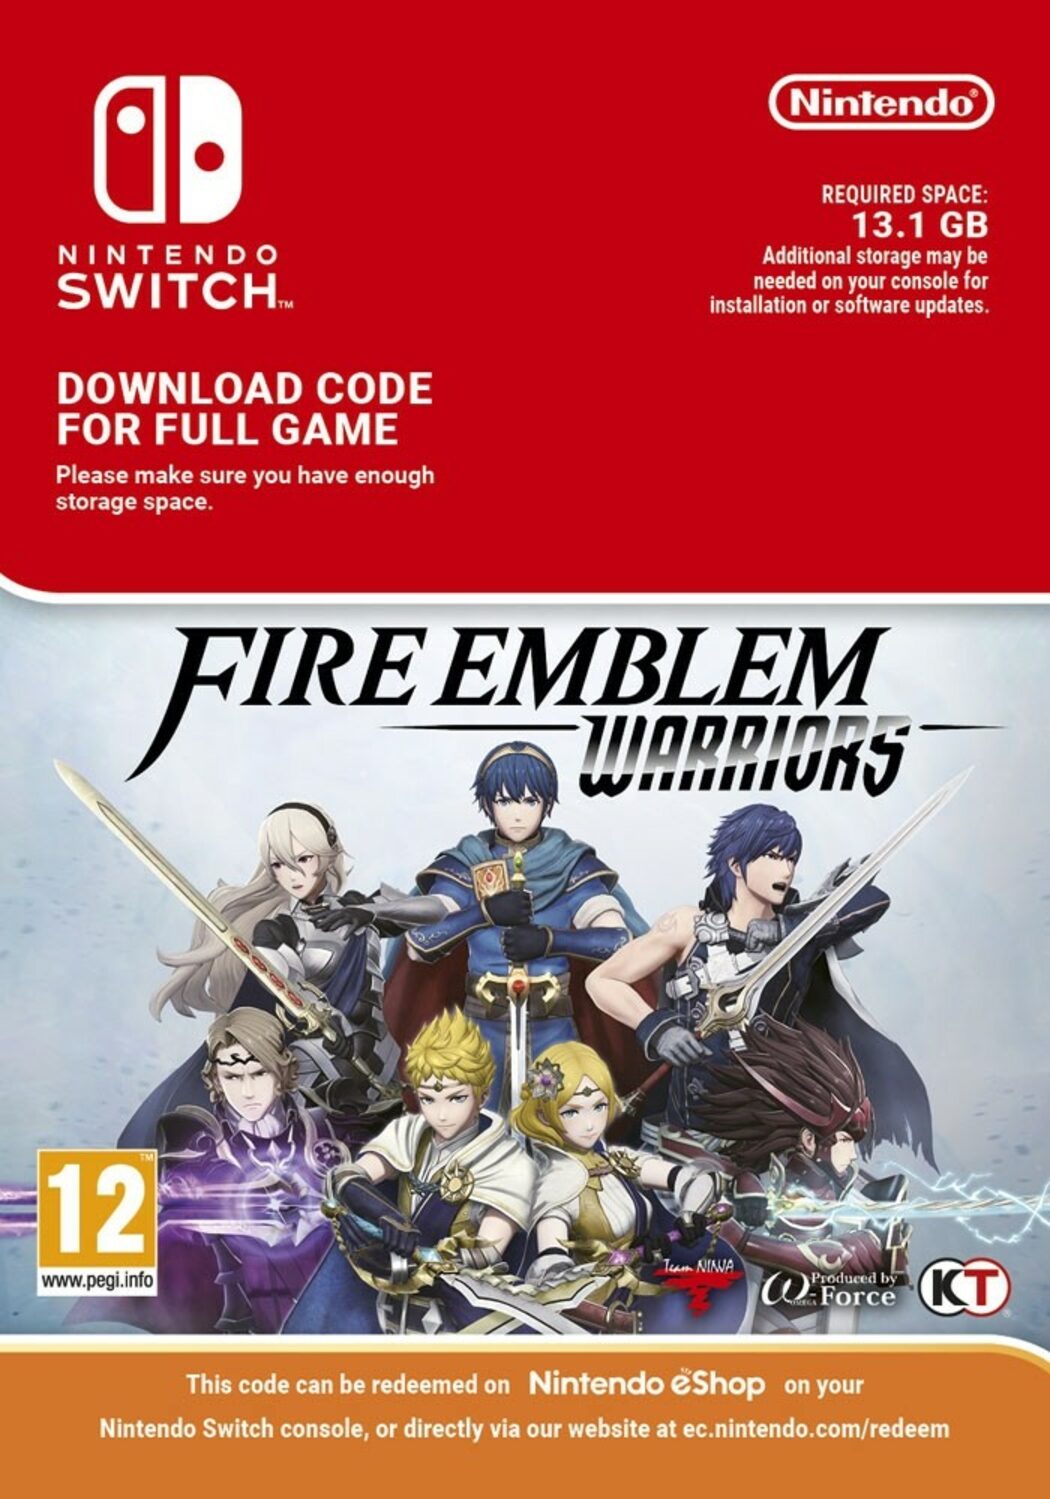 cheaper Buy Nintendo | Warriors ENEBA Switch Emblem Fire key.